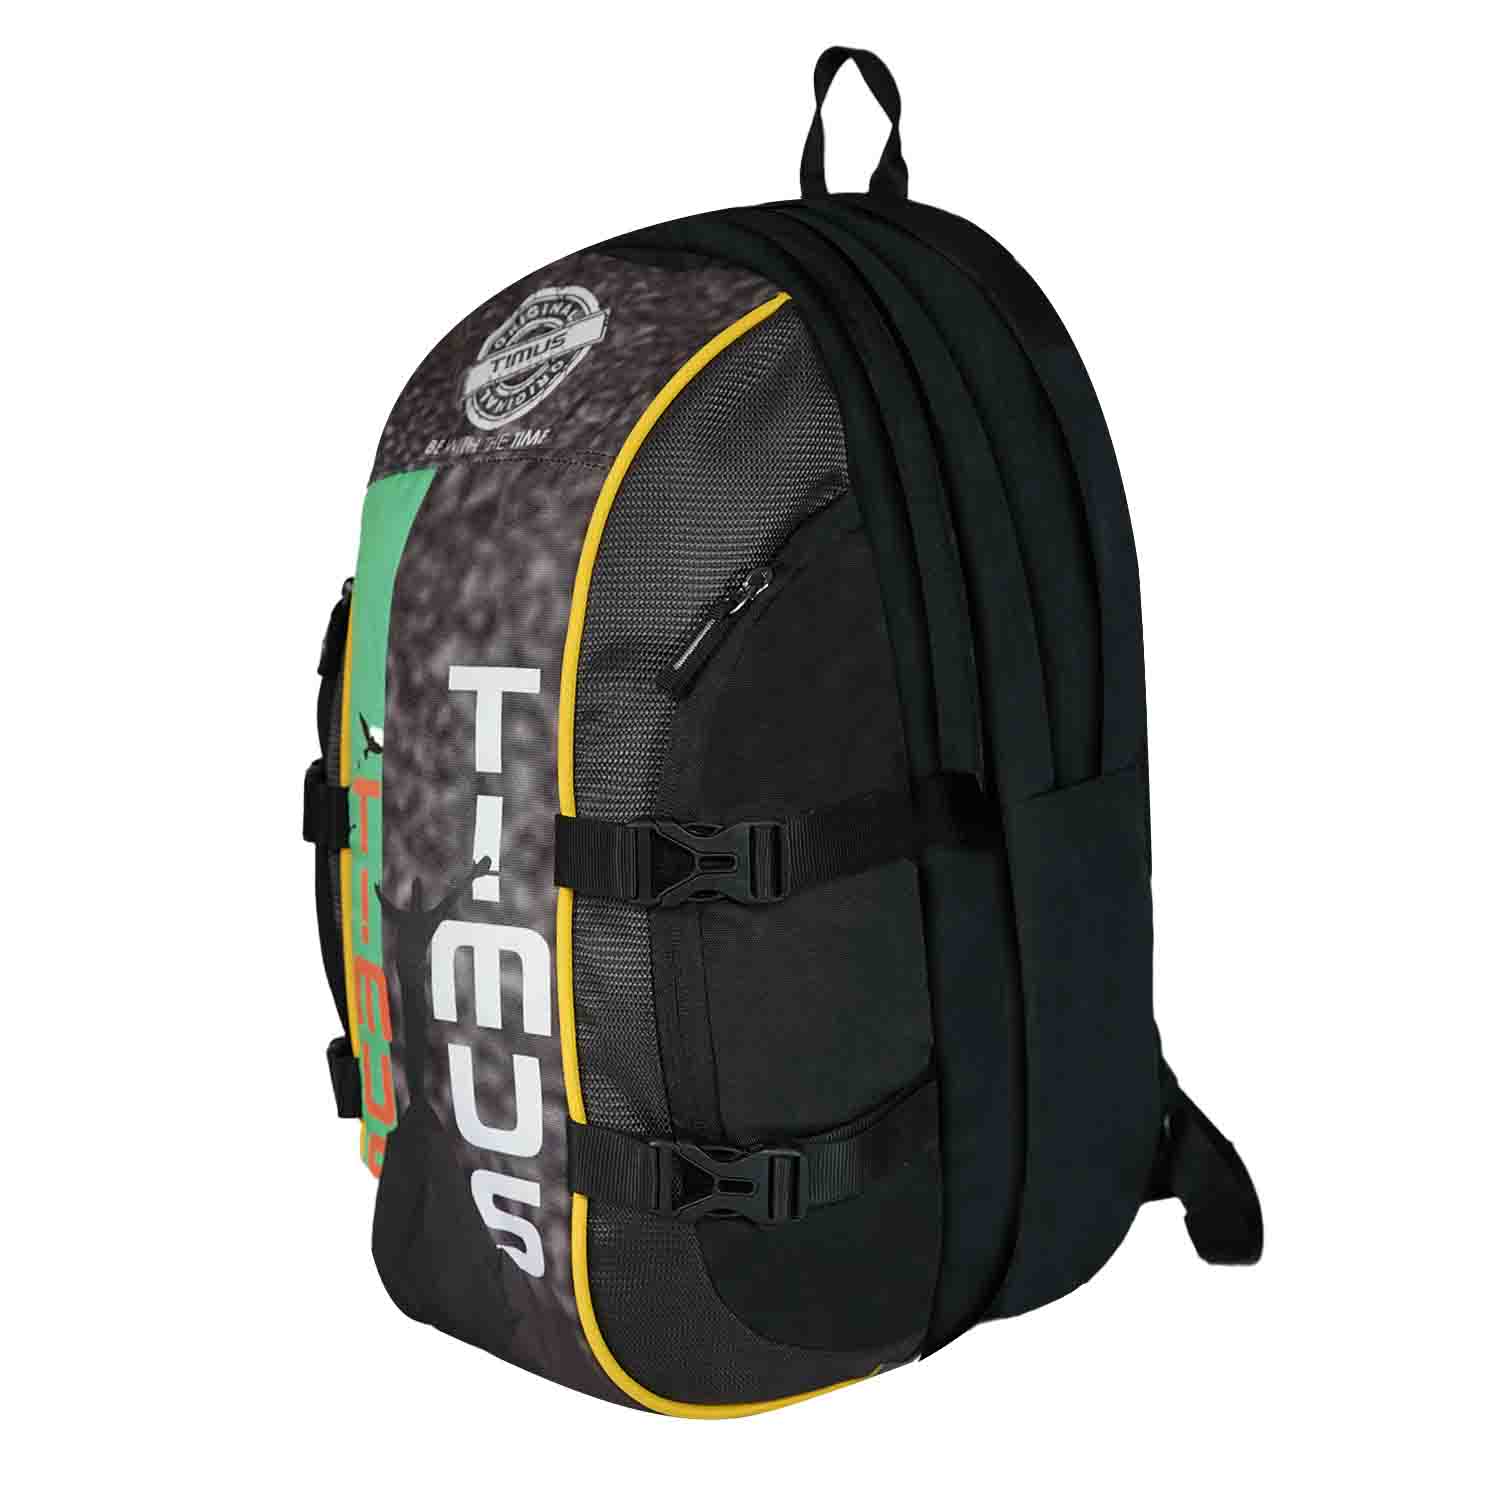 Timus-Lifestyle-backpacks-casual-backpacks-here-i-am-black-3